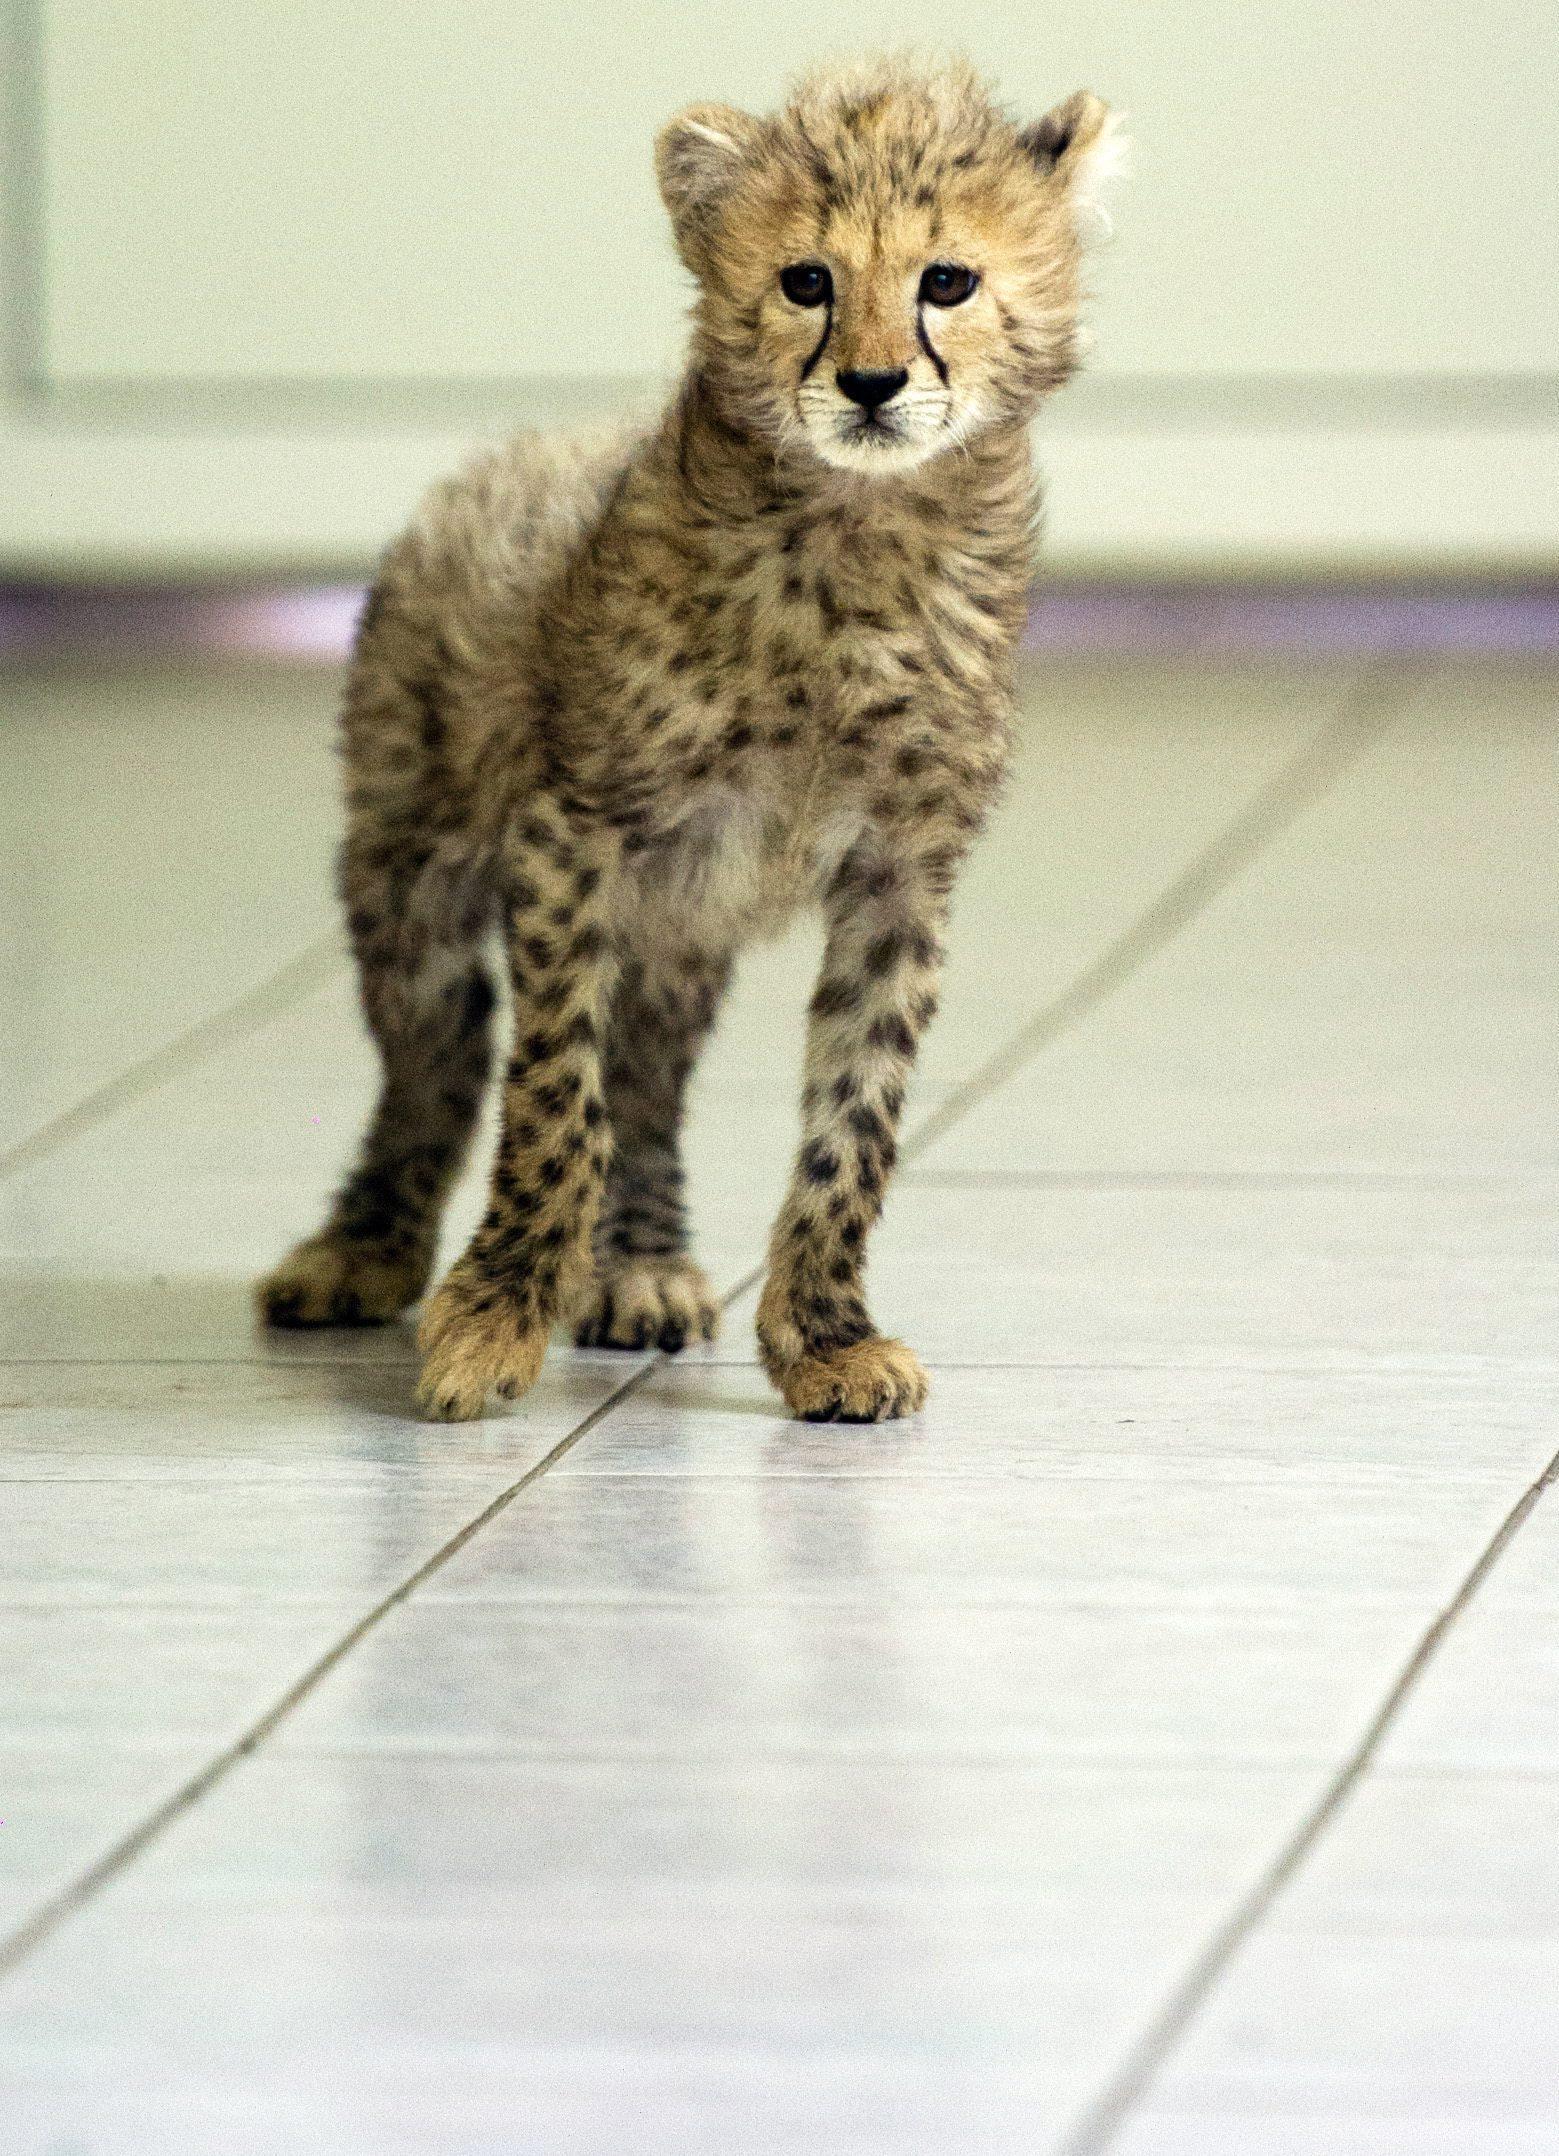 Baby cheetah in Lodz Zoo03